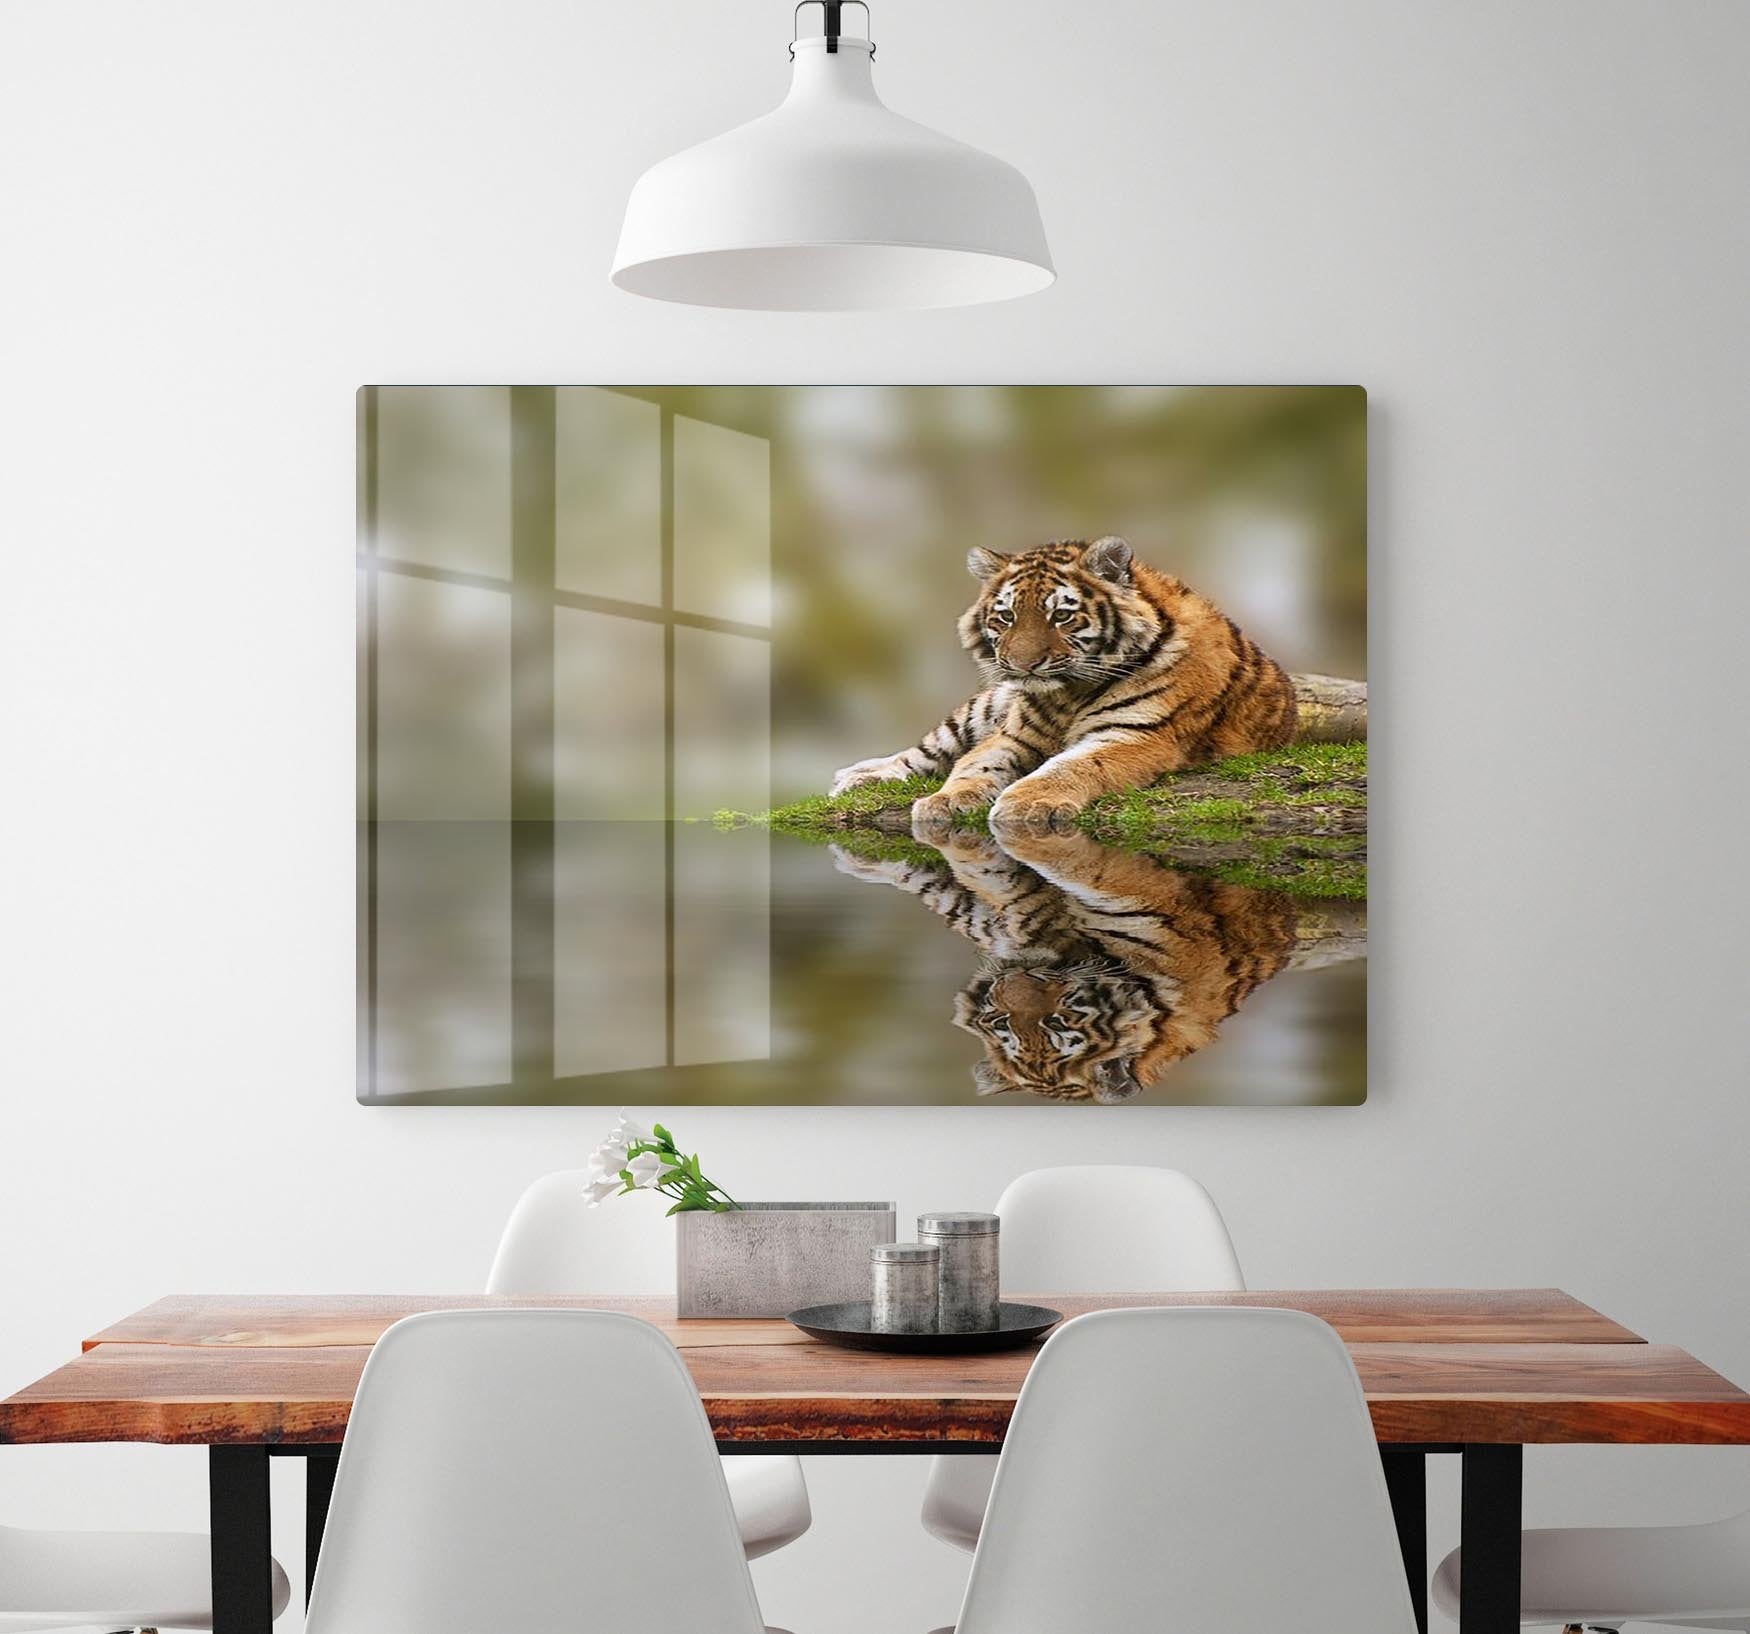 Sttunning tiger cub relaxing on a warm day HD Metal Print - Canvas Art Rocks - 2